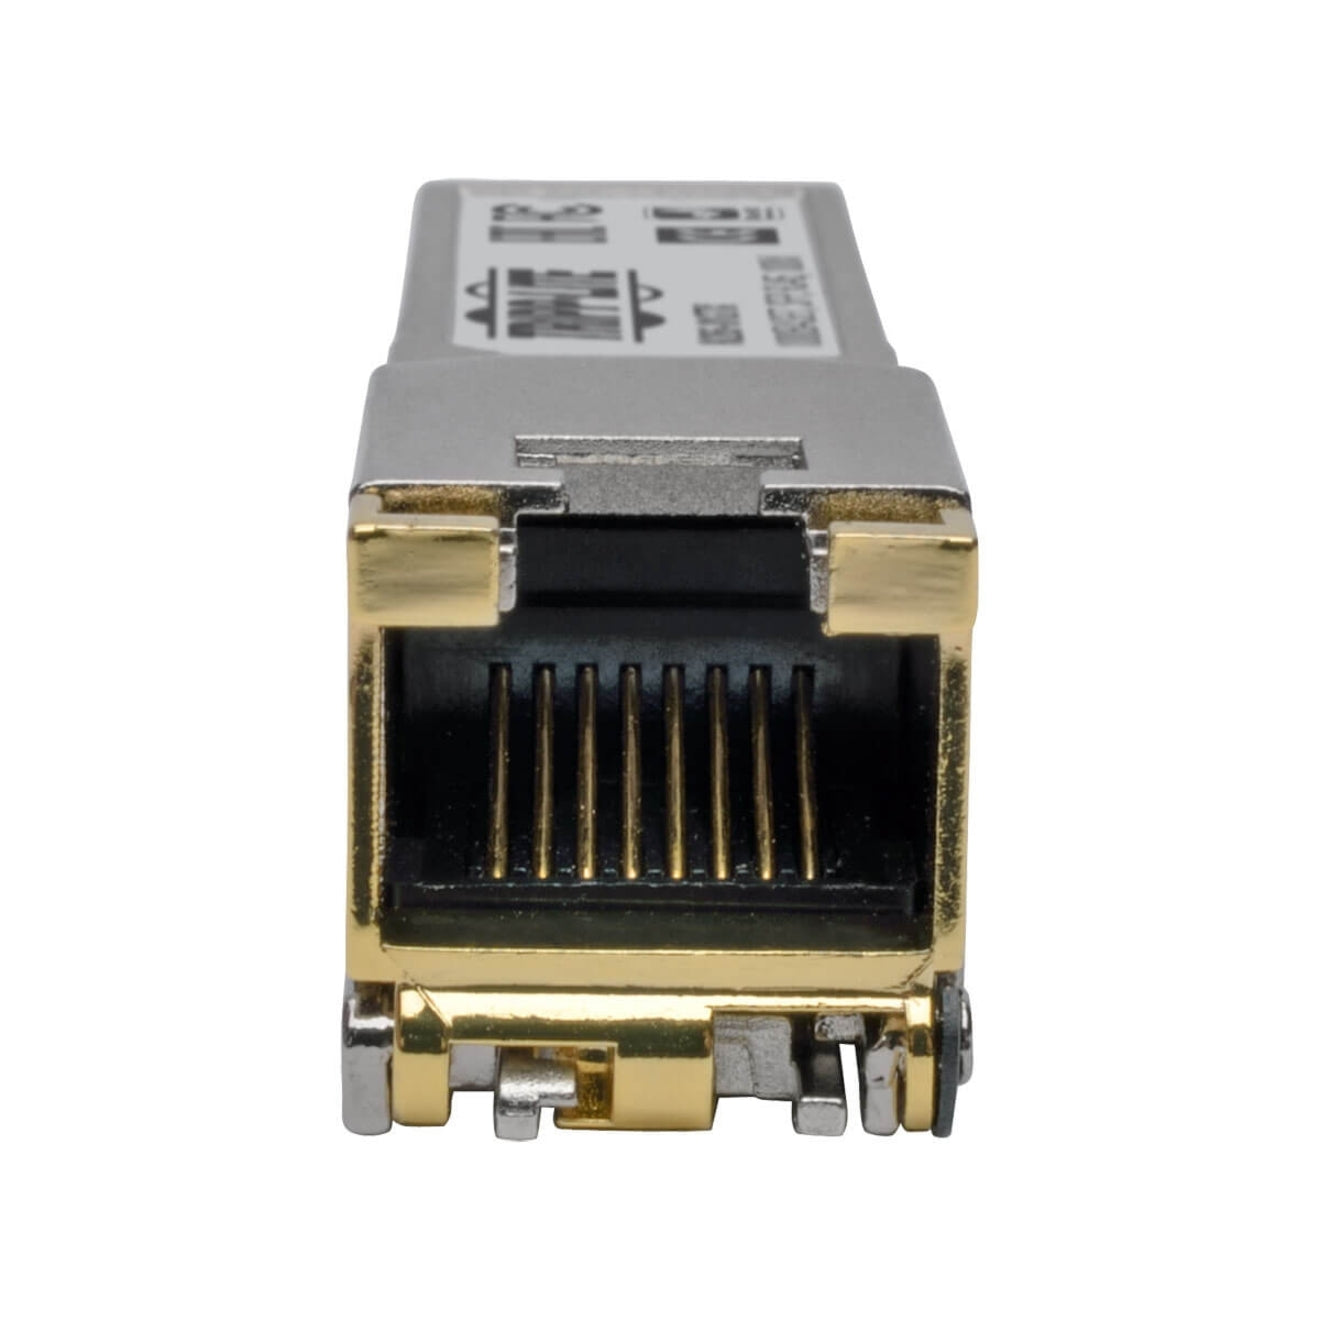 Tripp Lite N286-01GTX Cisco GLC-T Kompatibler 1000Base-TX Kupfer RJ45 SFP Mini Transceiver